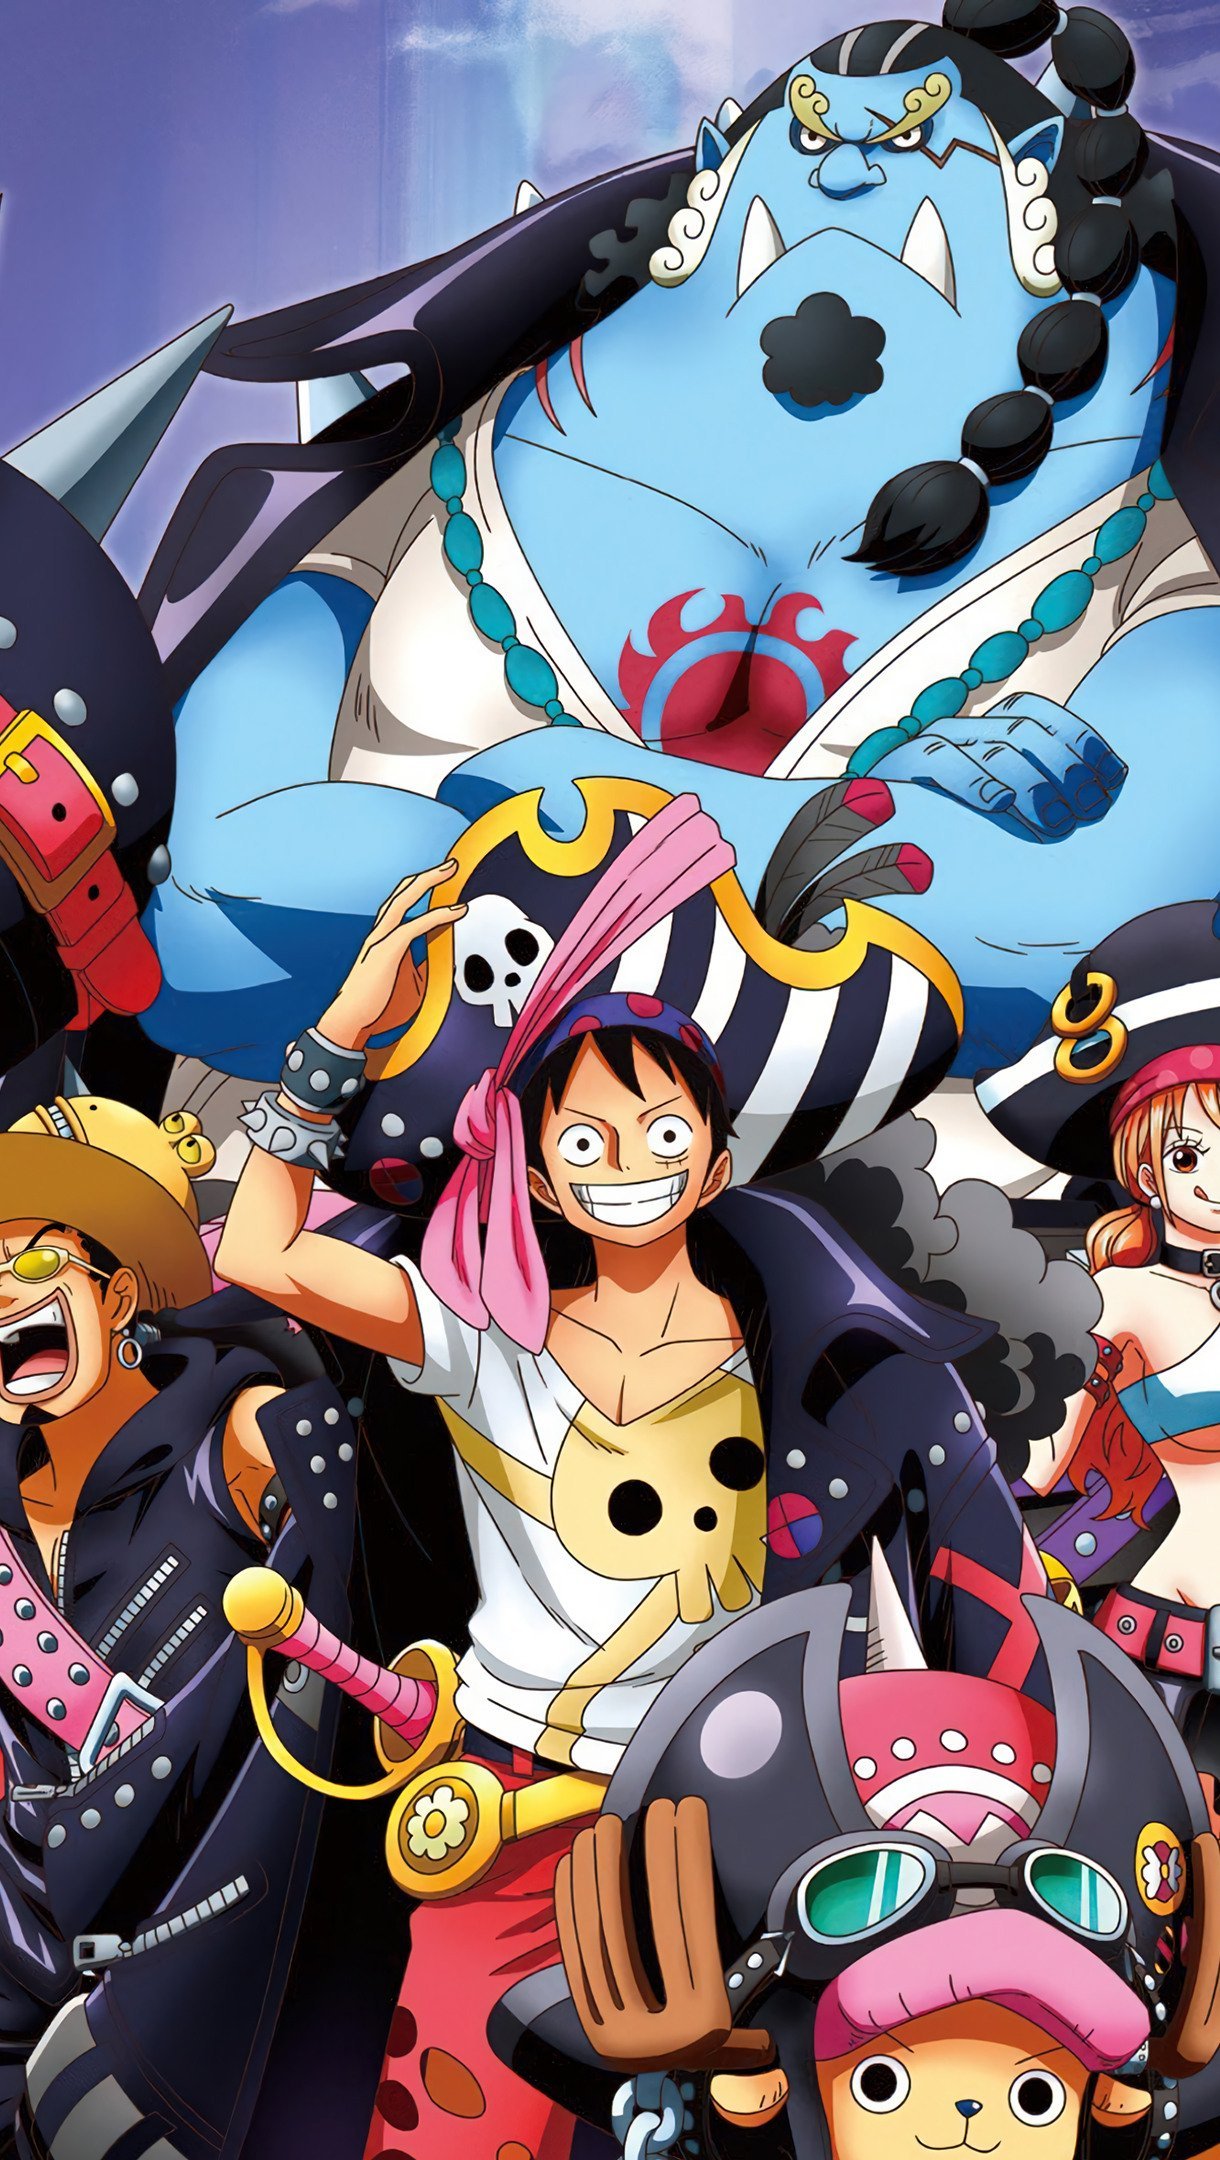 Personajes de One Piece Fondo de pantalla 4k Ultra HD ID:10552